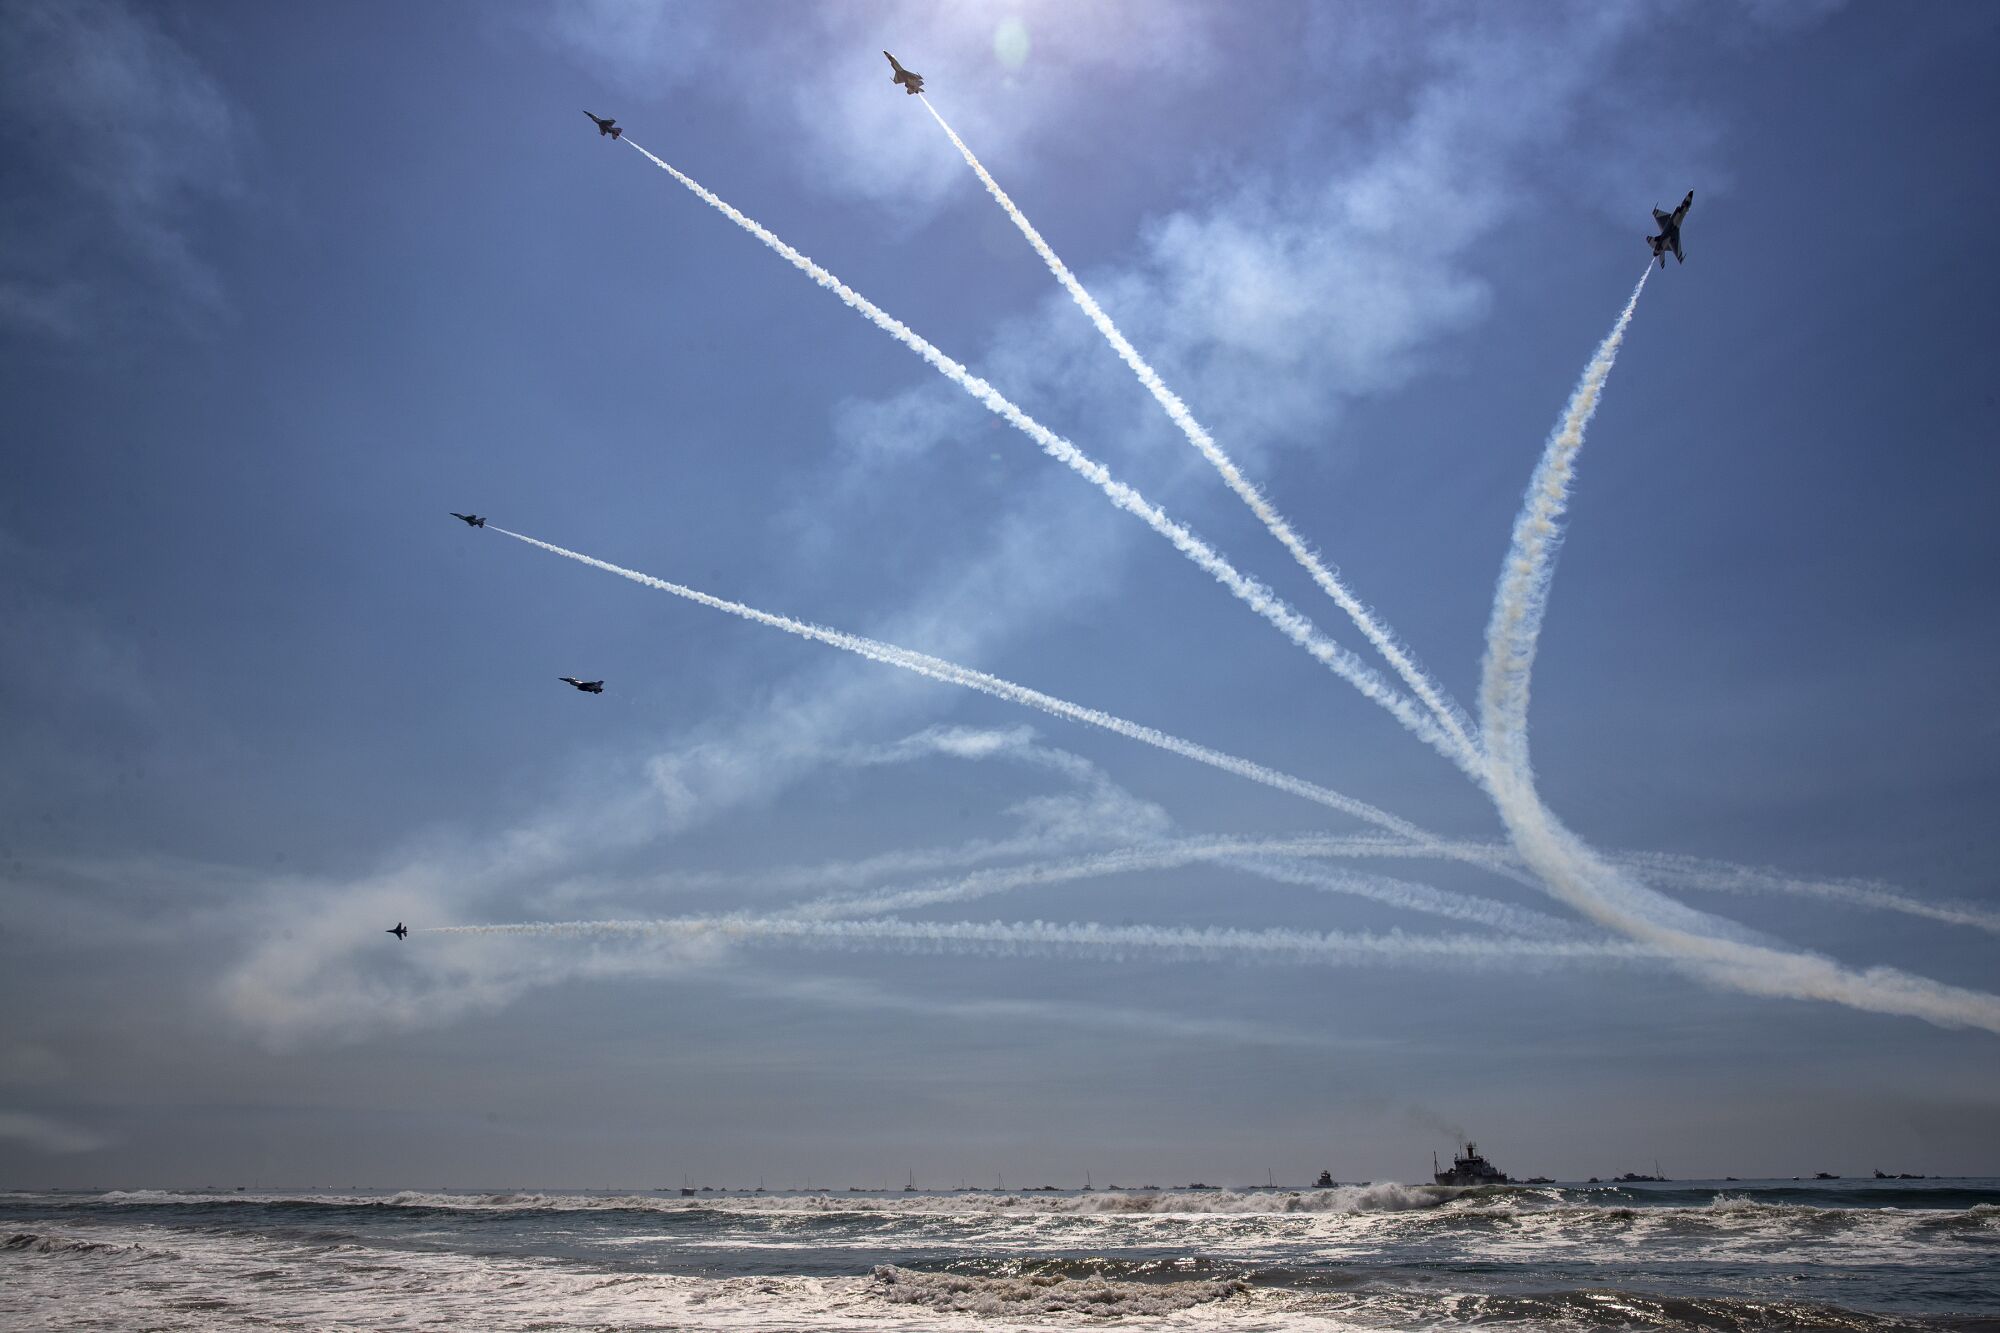  U.S. Air Force Thunderbirds break formation over the ocean